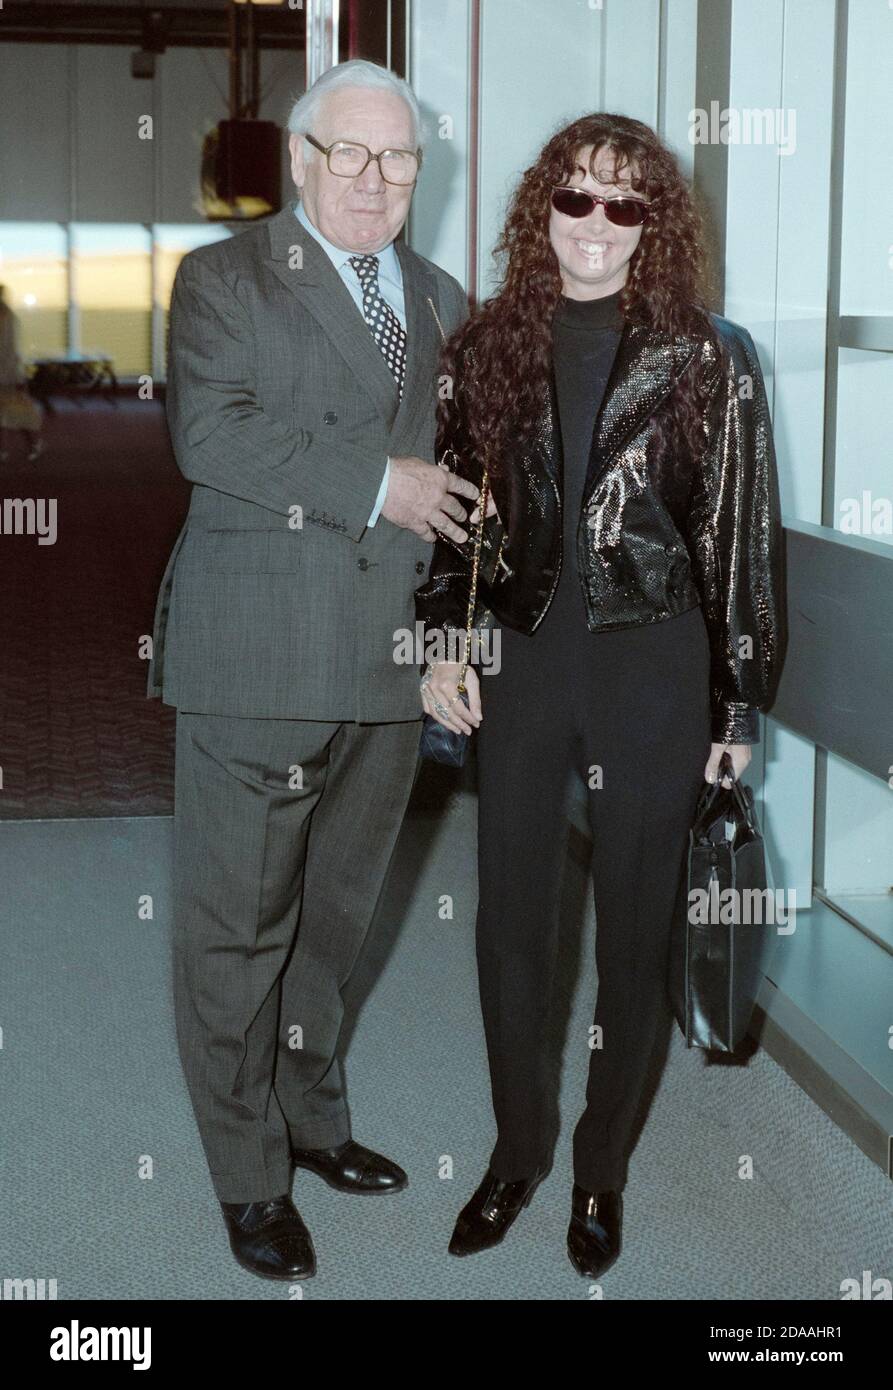 British Airways Chairman Lord King and Opera singer Sarah Brightman at London Heathrow Airport 1990 Stock Photo